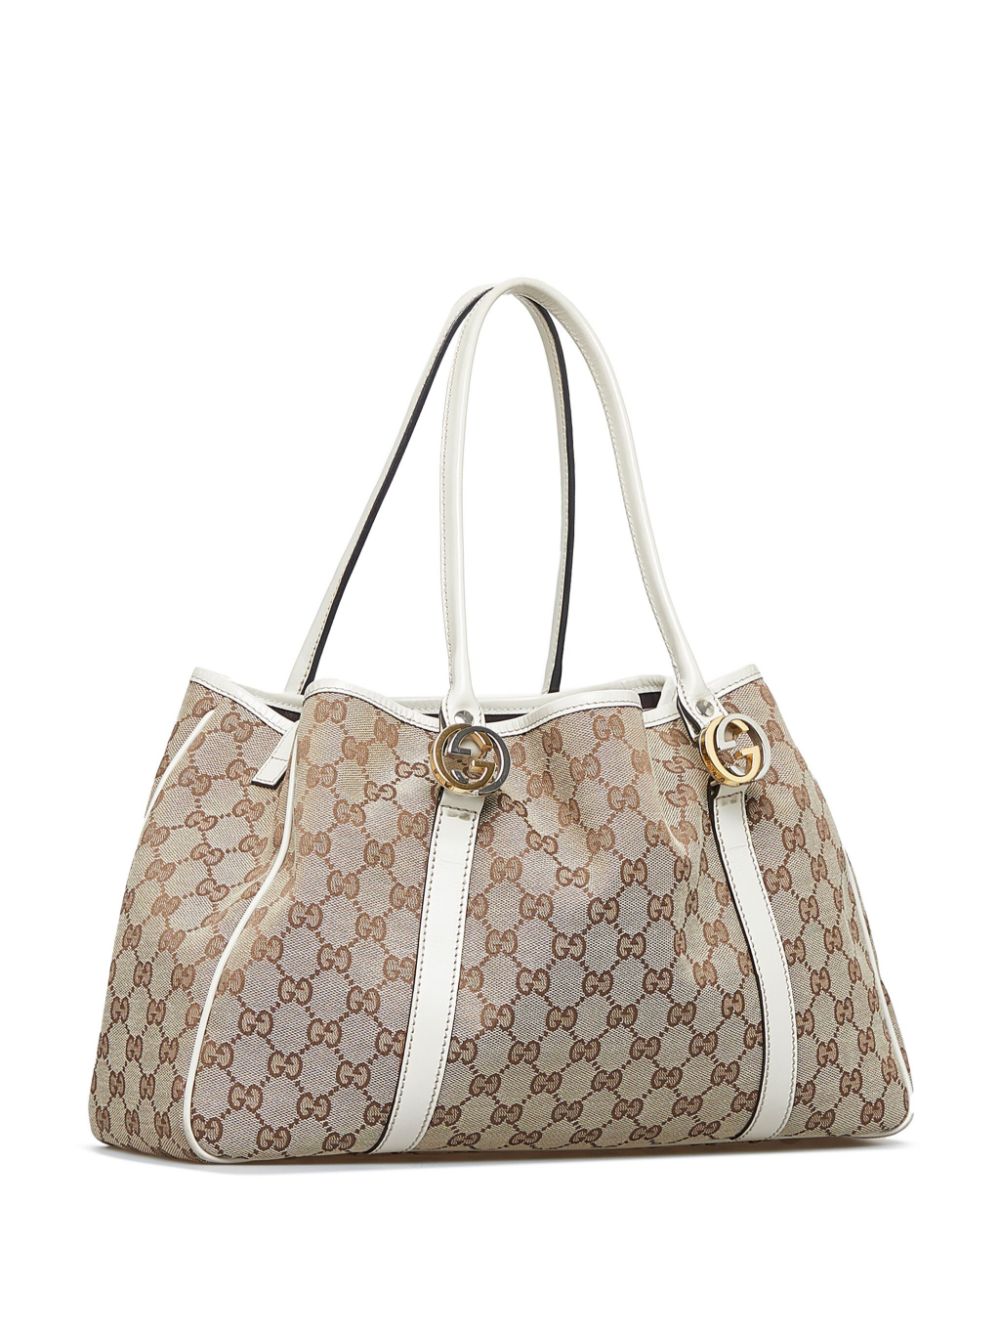 Gucci Pre-Owned Gifford Tote Bag - Farfetch